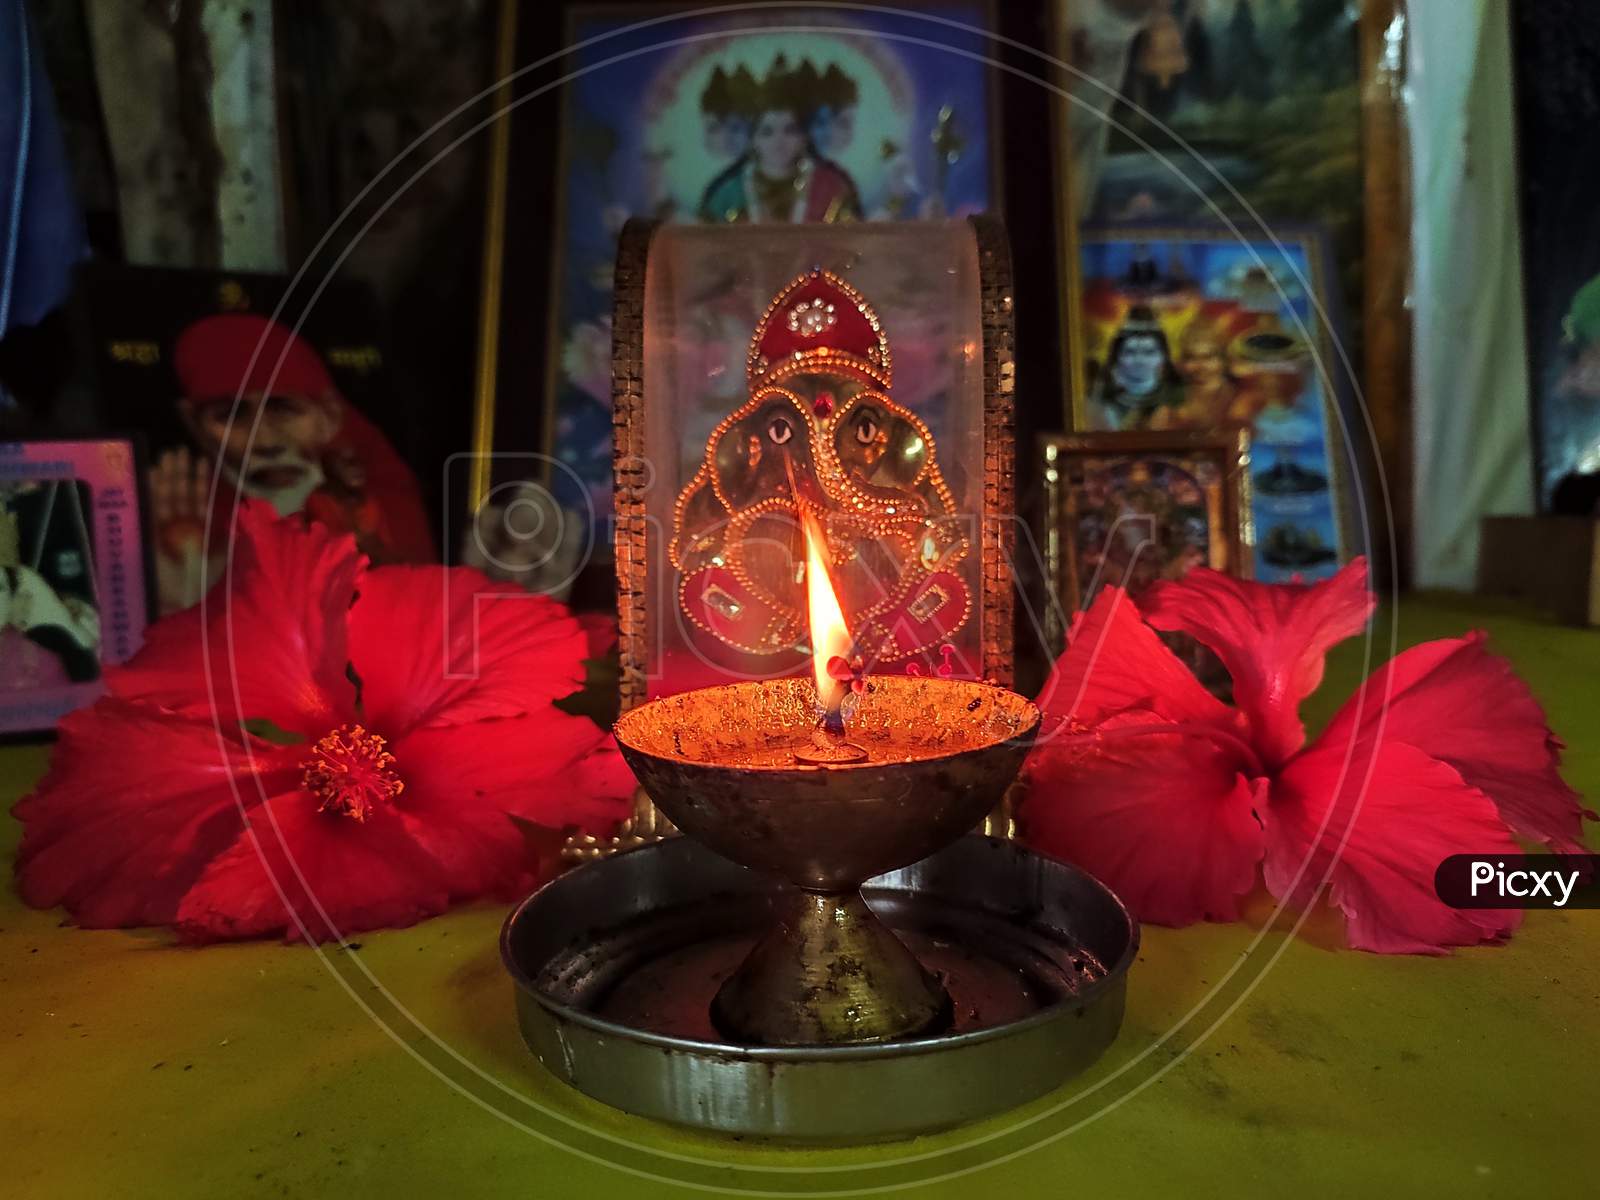 Ganesh idol with lamp, ganpati sthapana at home in lockdown